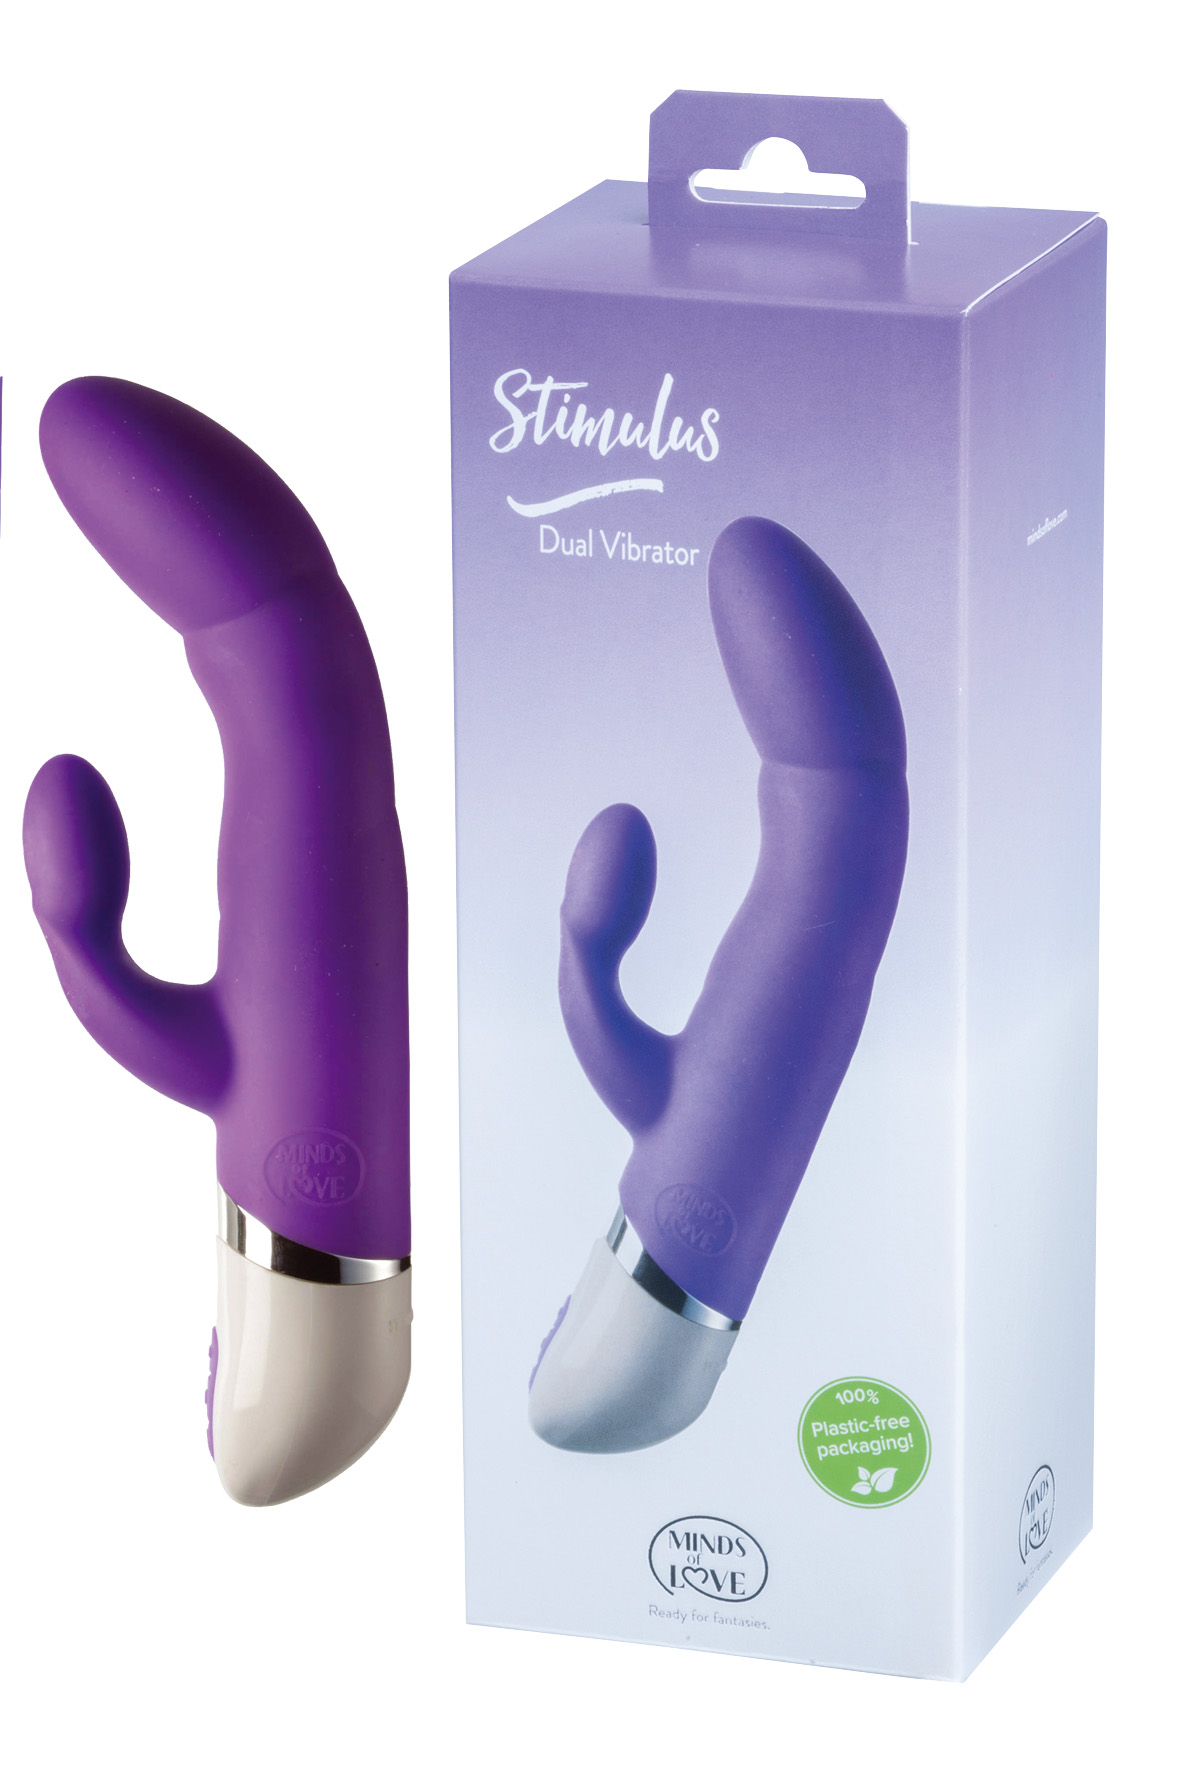 MINDS of LOVE Stimulus Dual Vibrator purple